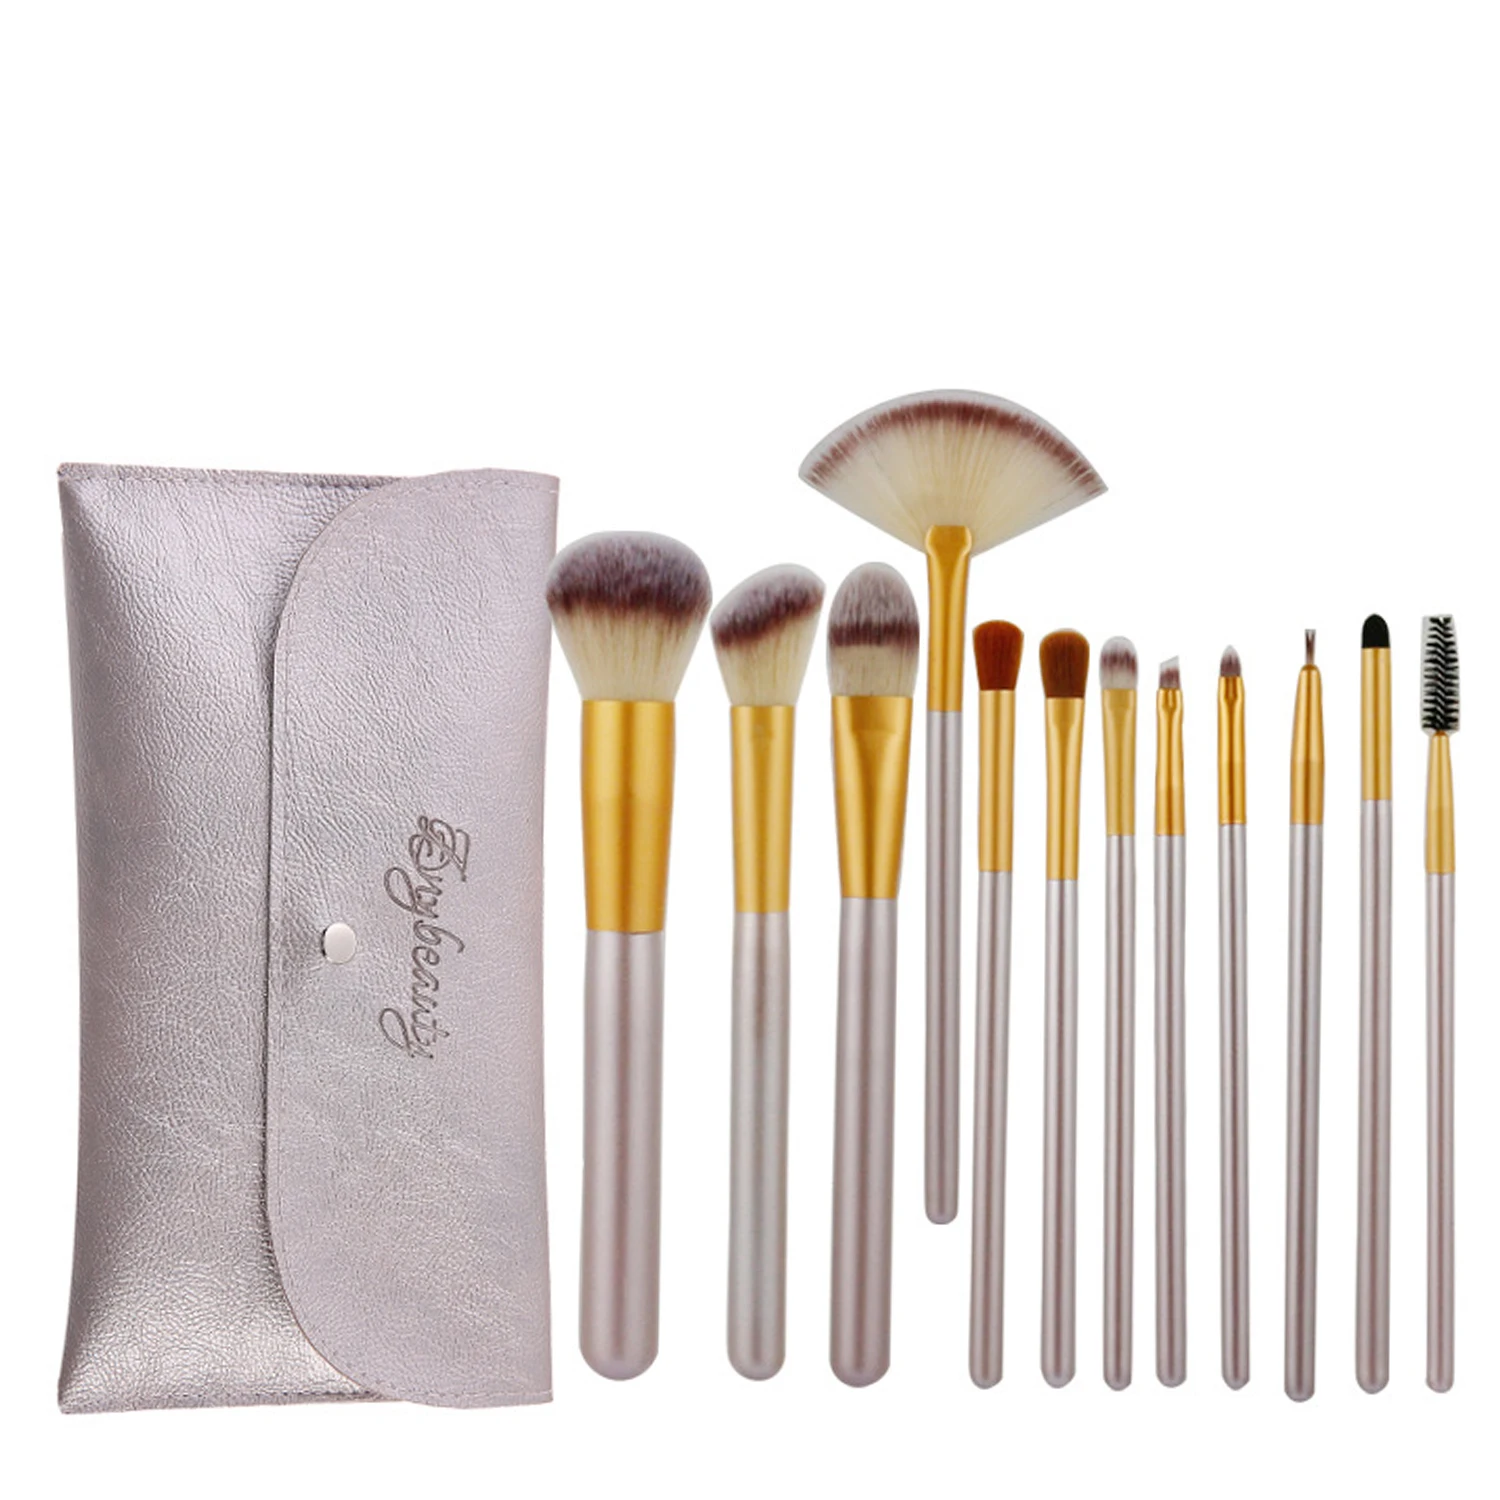 12/18pcs Champagne makeup brushes set for cosmetic foundation powder blush eyeshadow kabuki blending make up brush beauty tool